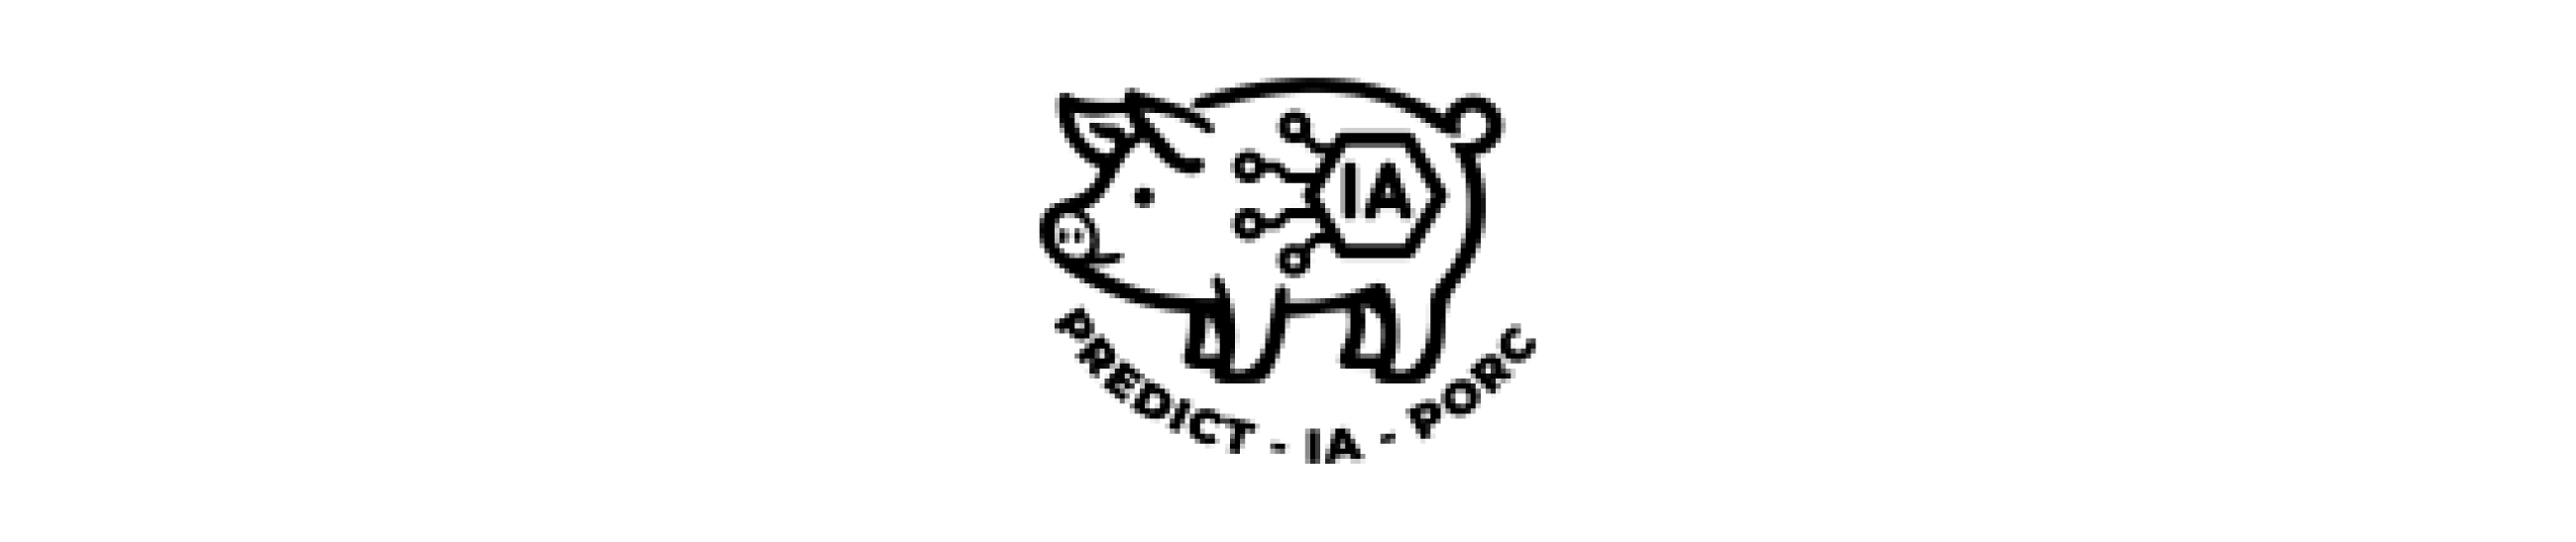 predictia_logo